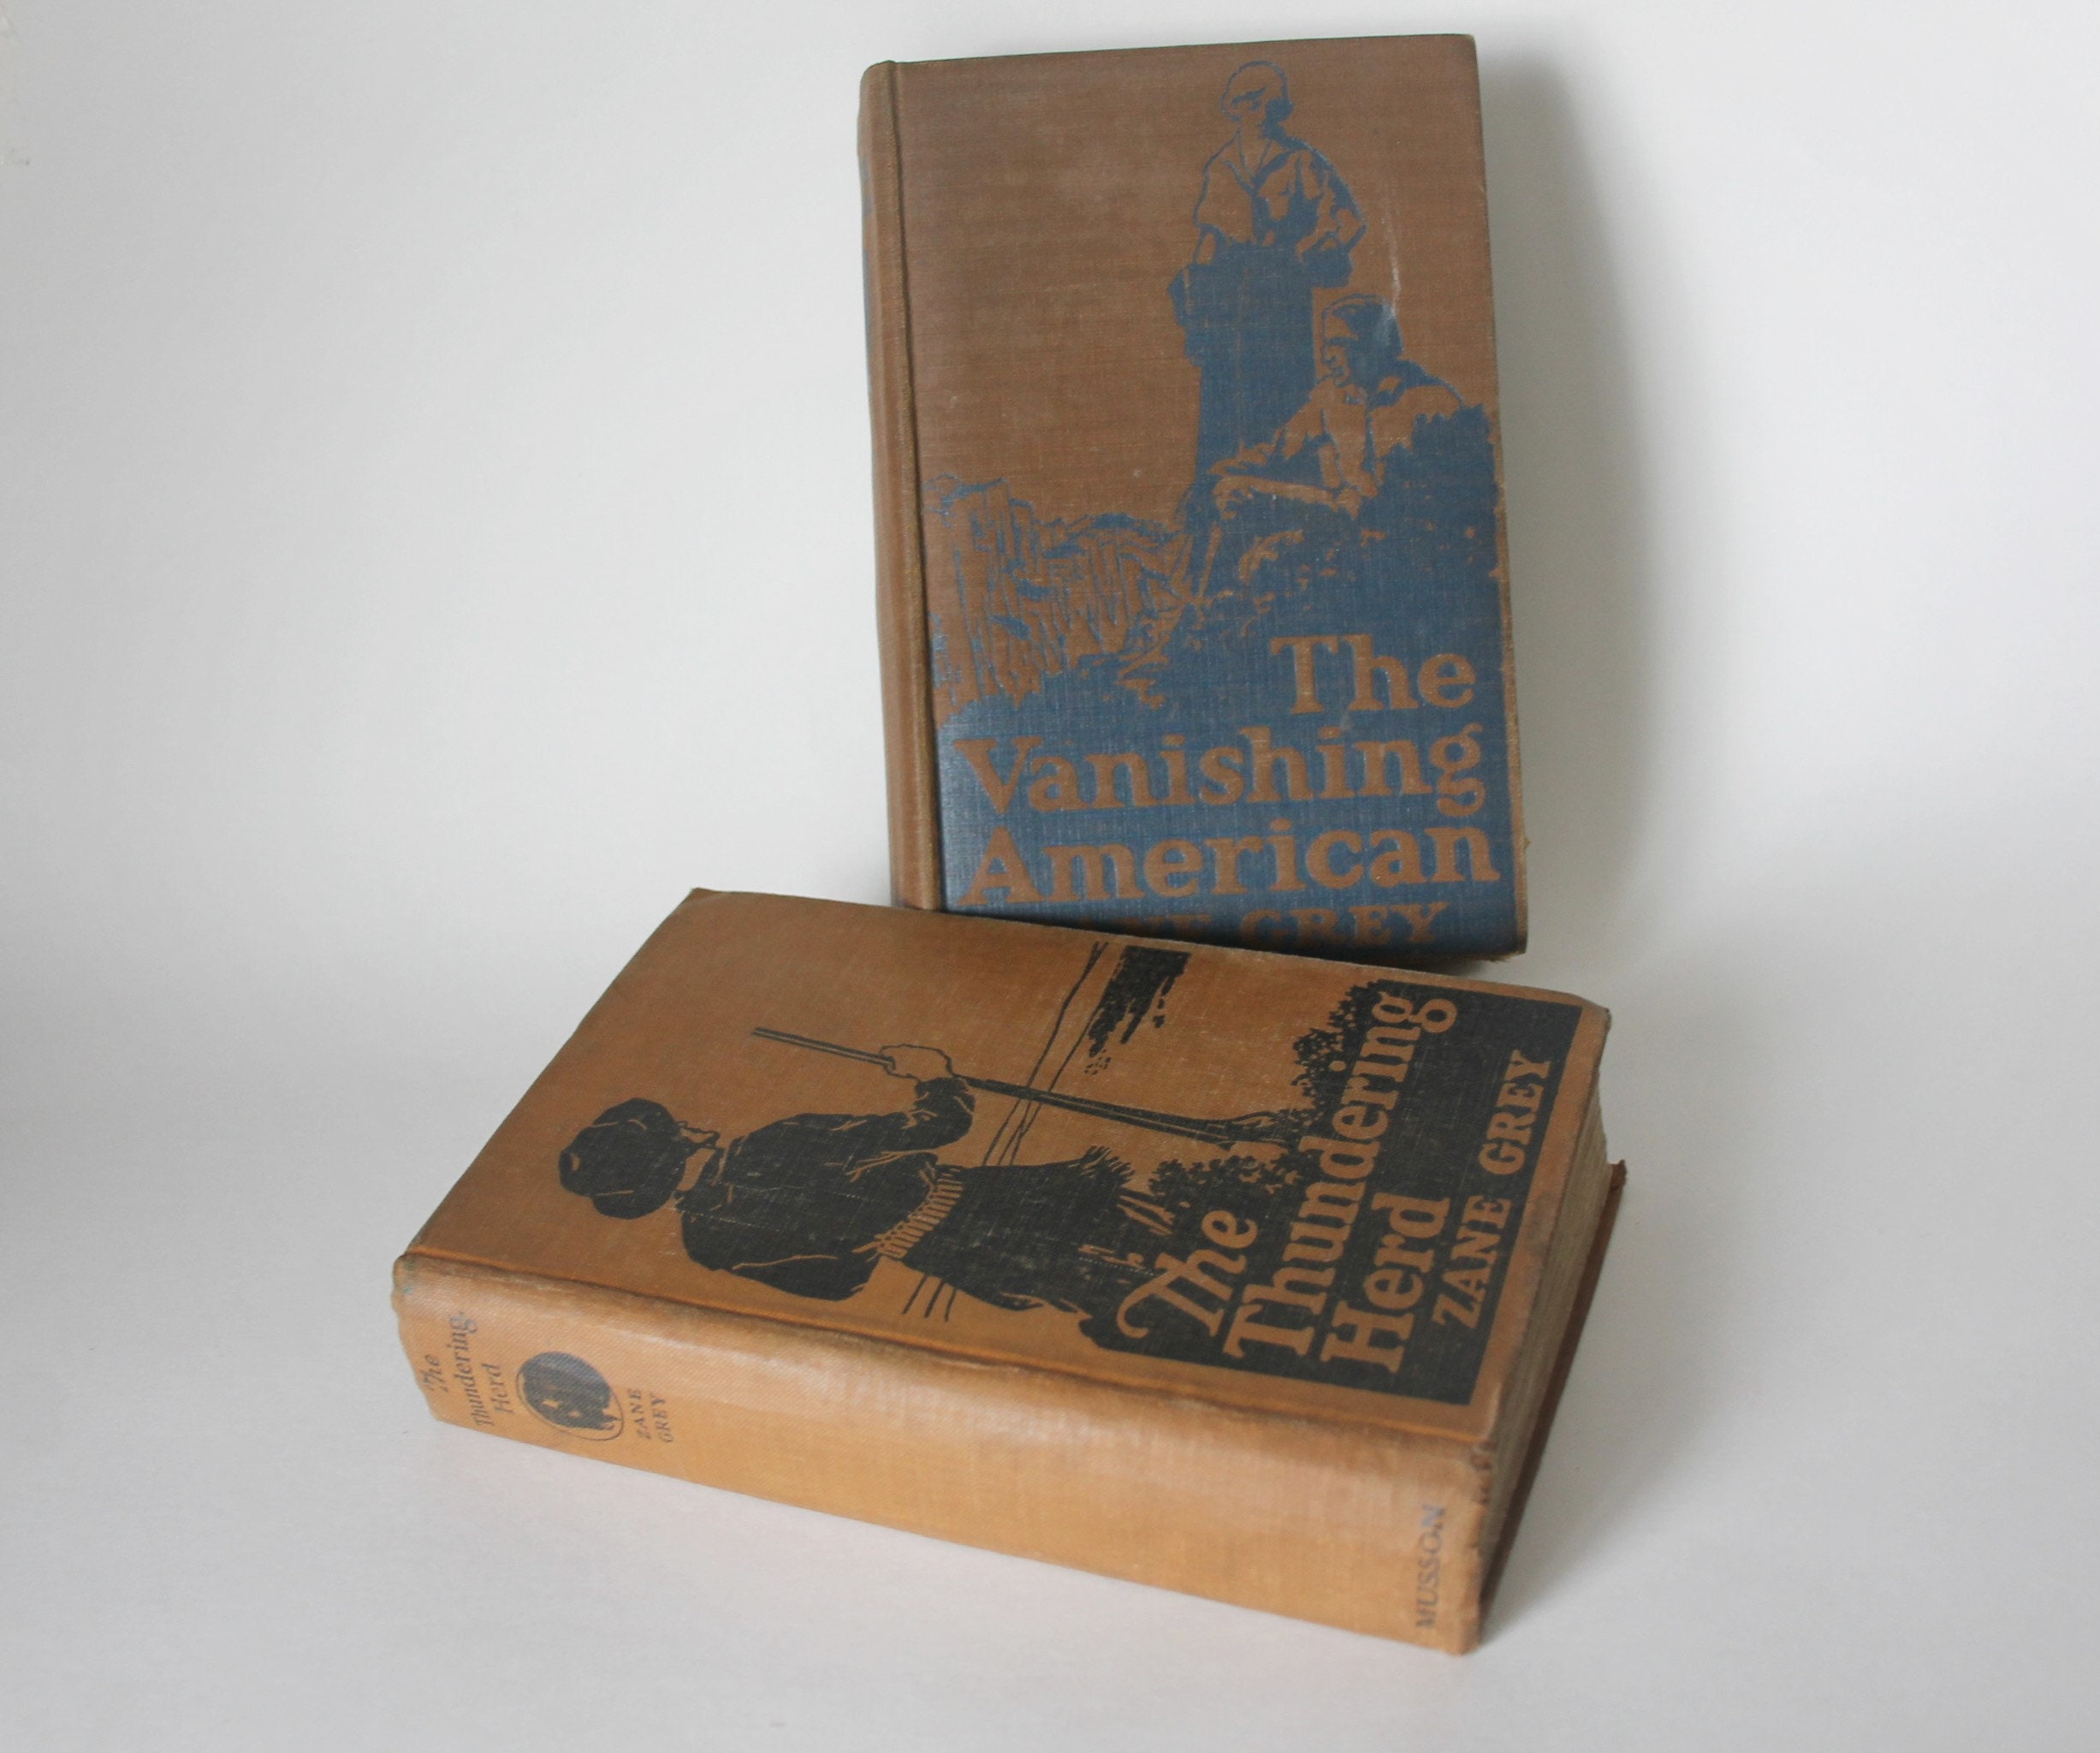 Fighting Caravans by Zane Grey - Hardcover - 1929 - from Blue & Grey Book  Shoppe (SKU: 1545)